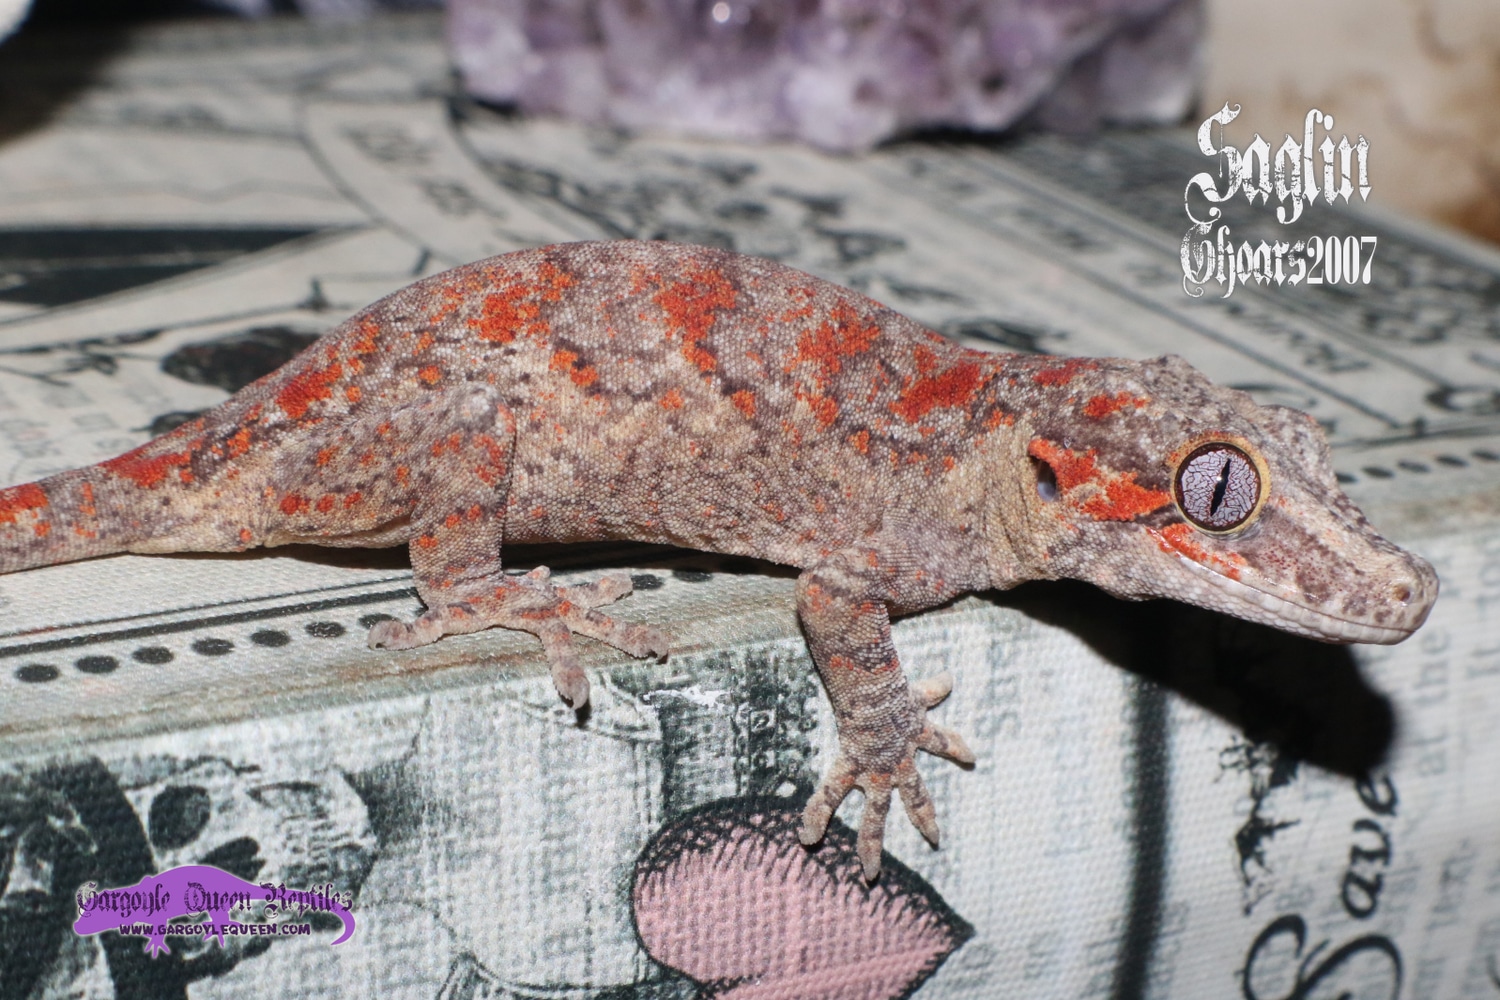 "Saglin" Red/Orange Blotch Banded Reticulated Gargoyle Gecko by Gargoyle Queen Reptiles